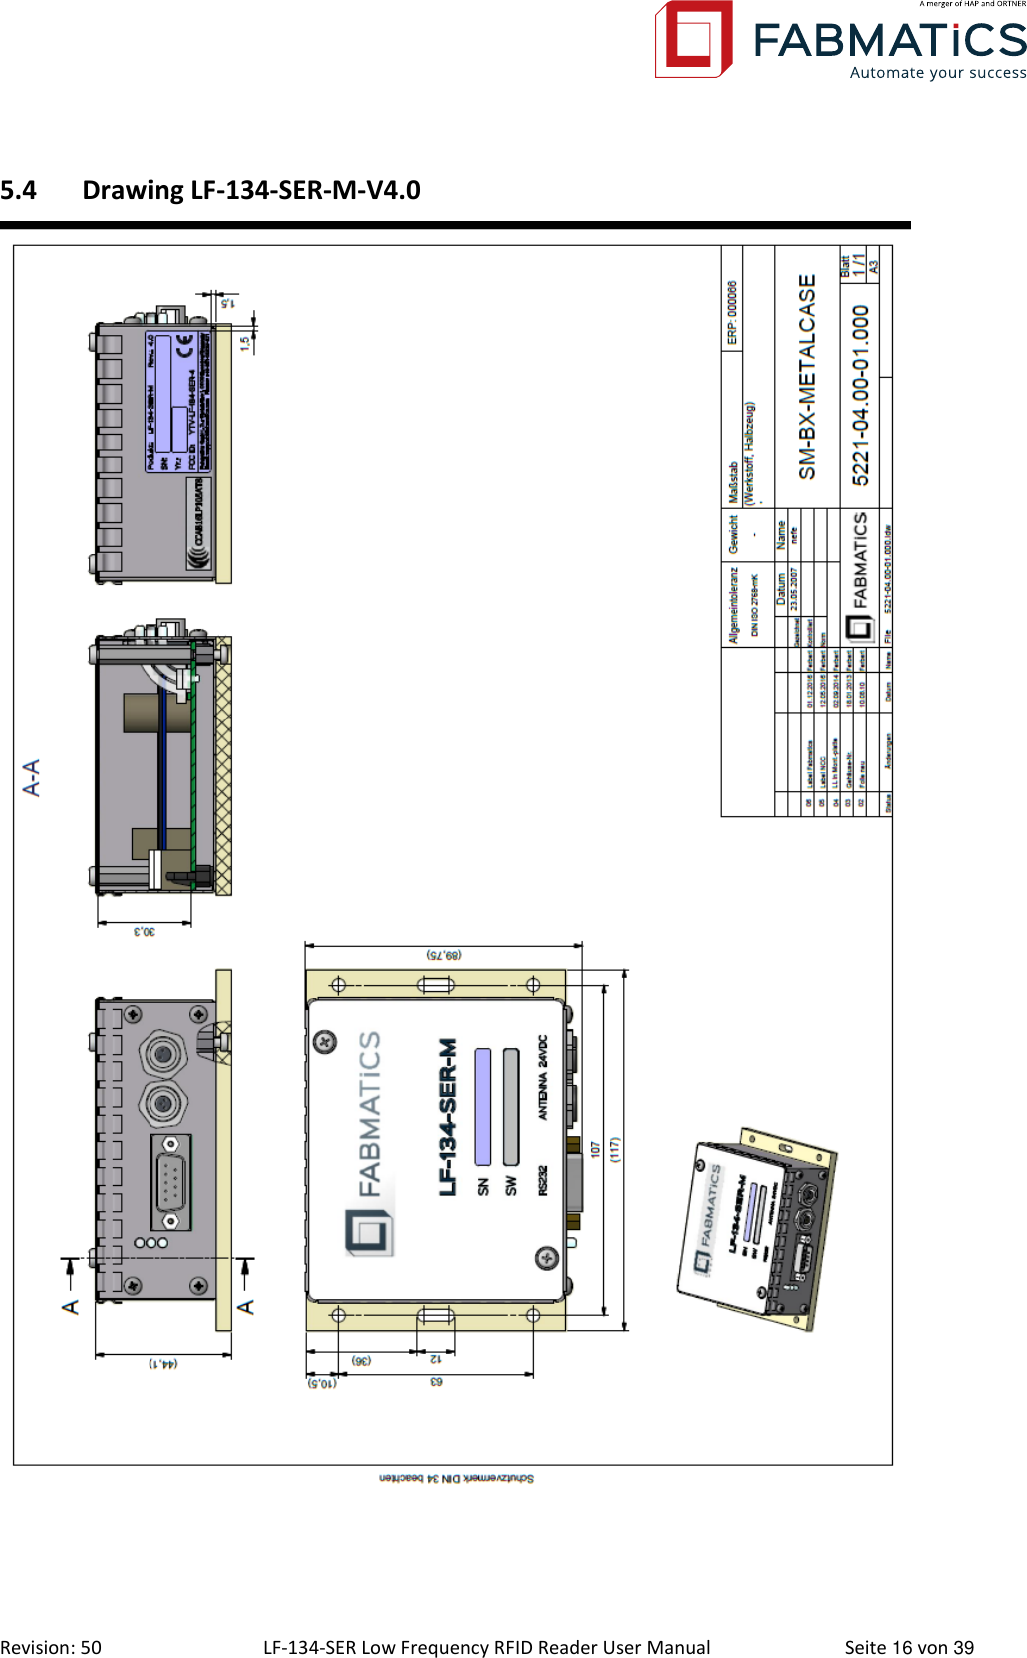  Revision: 50 LF-134-SER Low Frequency RFID Reader User Manual  Seite 16 von 39 5.4 Drawing LF-134-SER-M-V4.0    